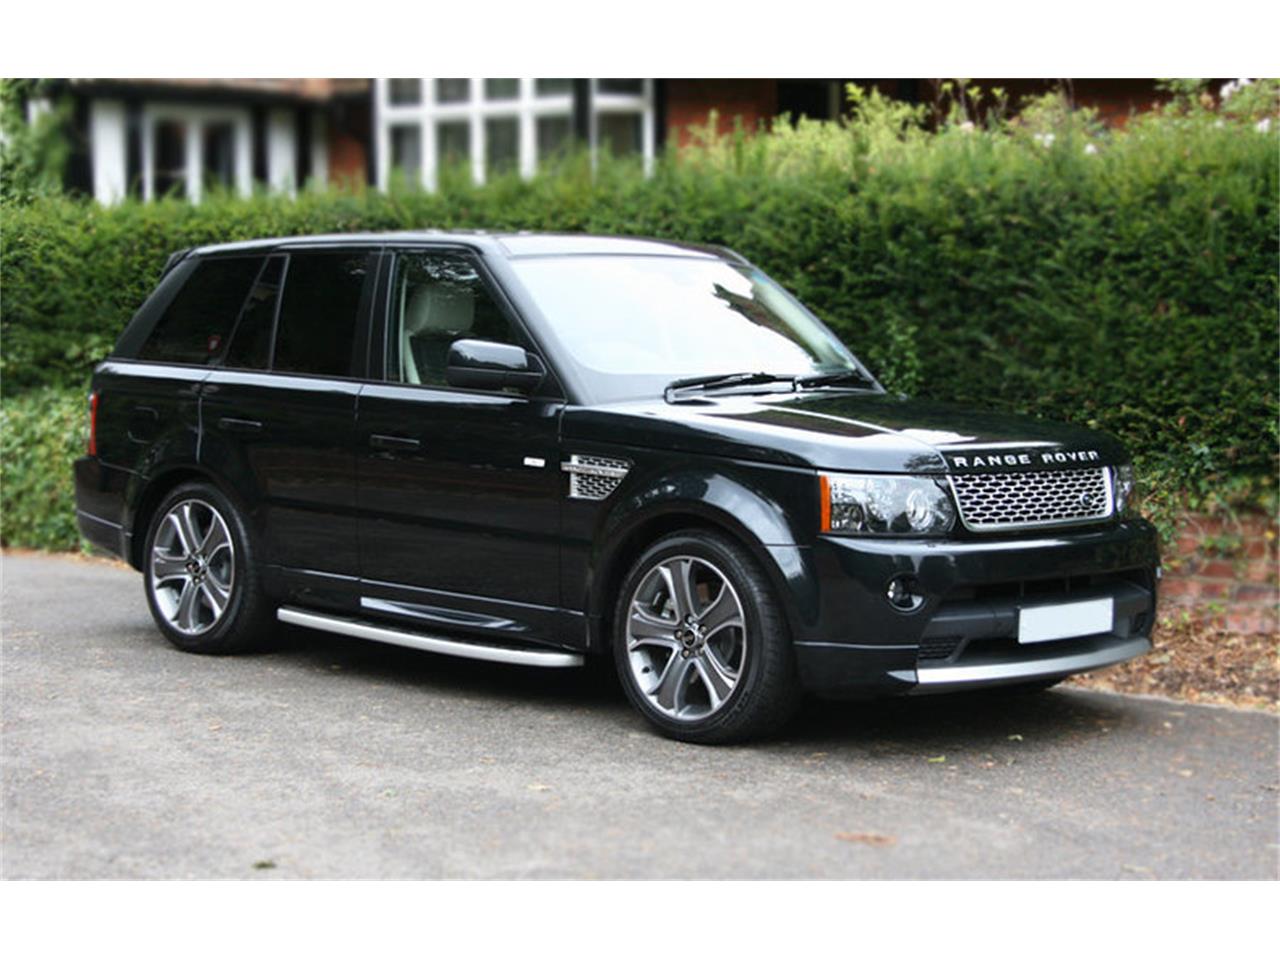 2012 Land Rover Range Rover Sport for Sale | ClassicCars.com CC-1156831